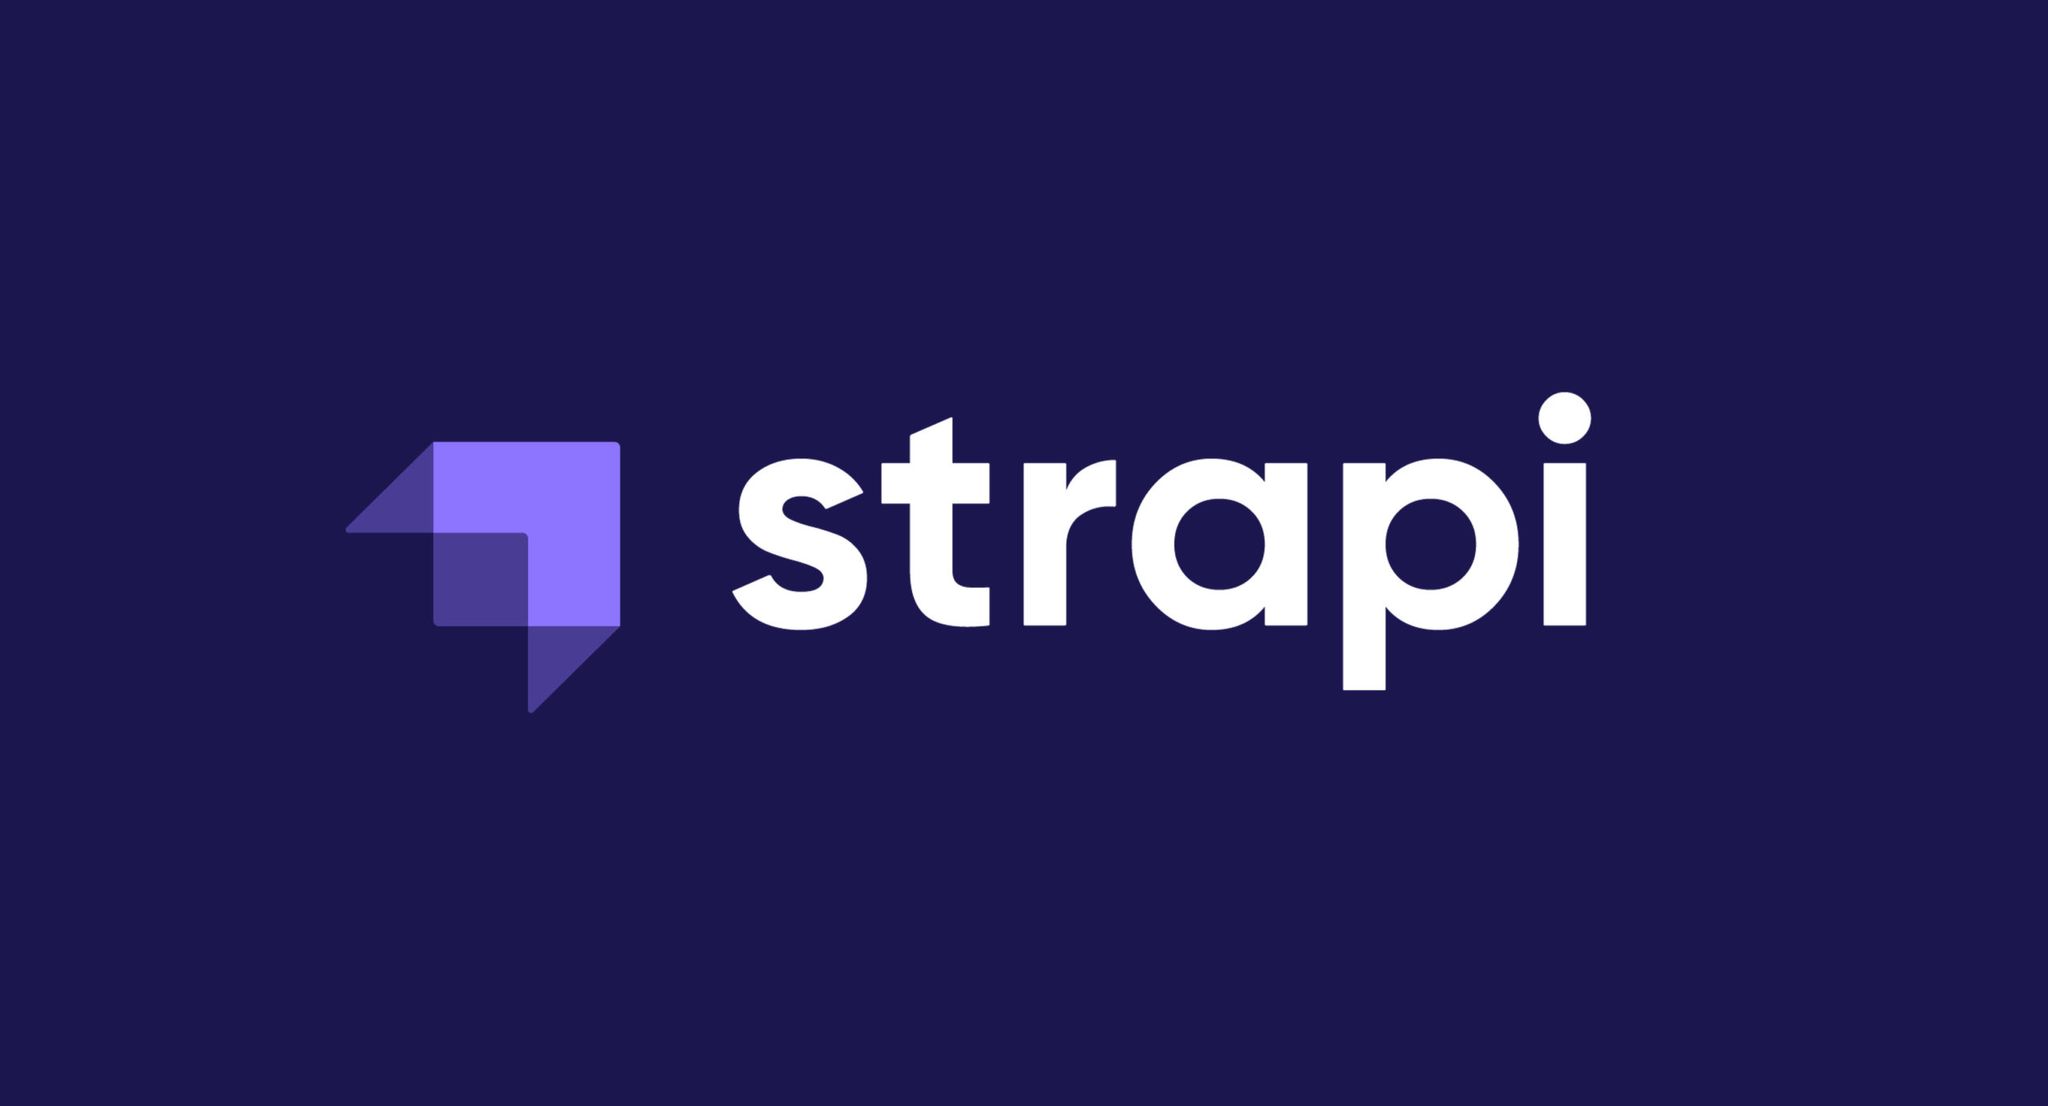 Strapi logo against a dark background